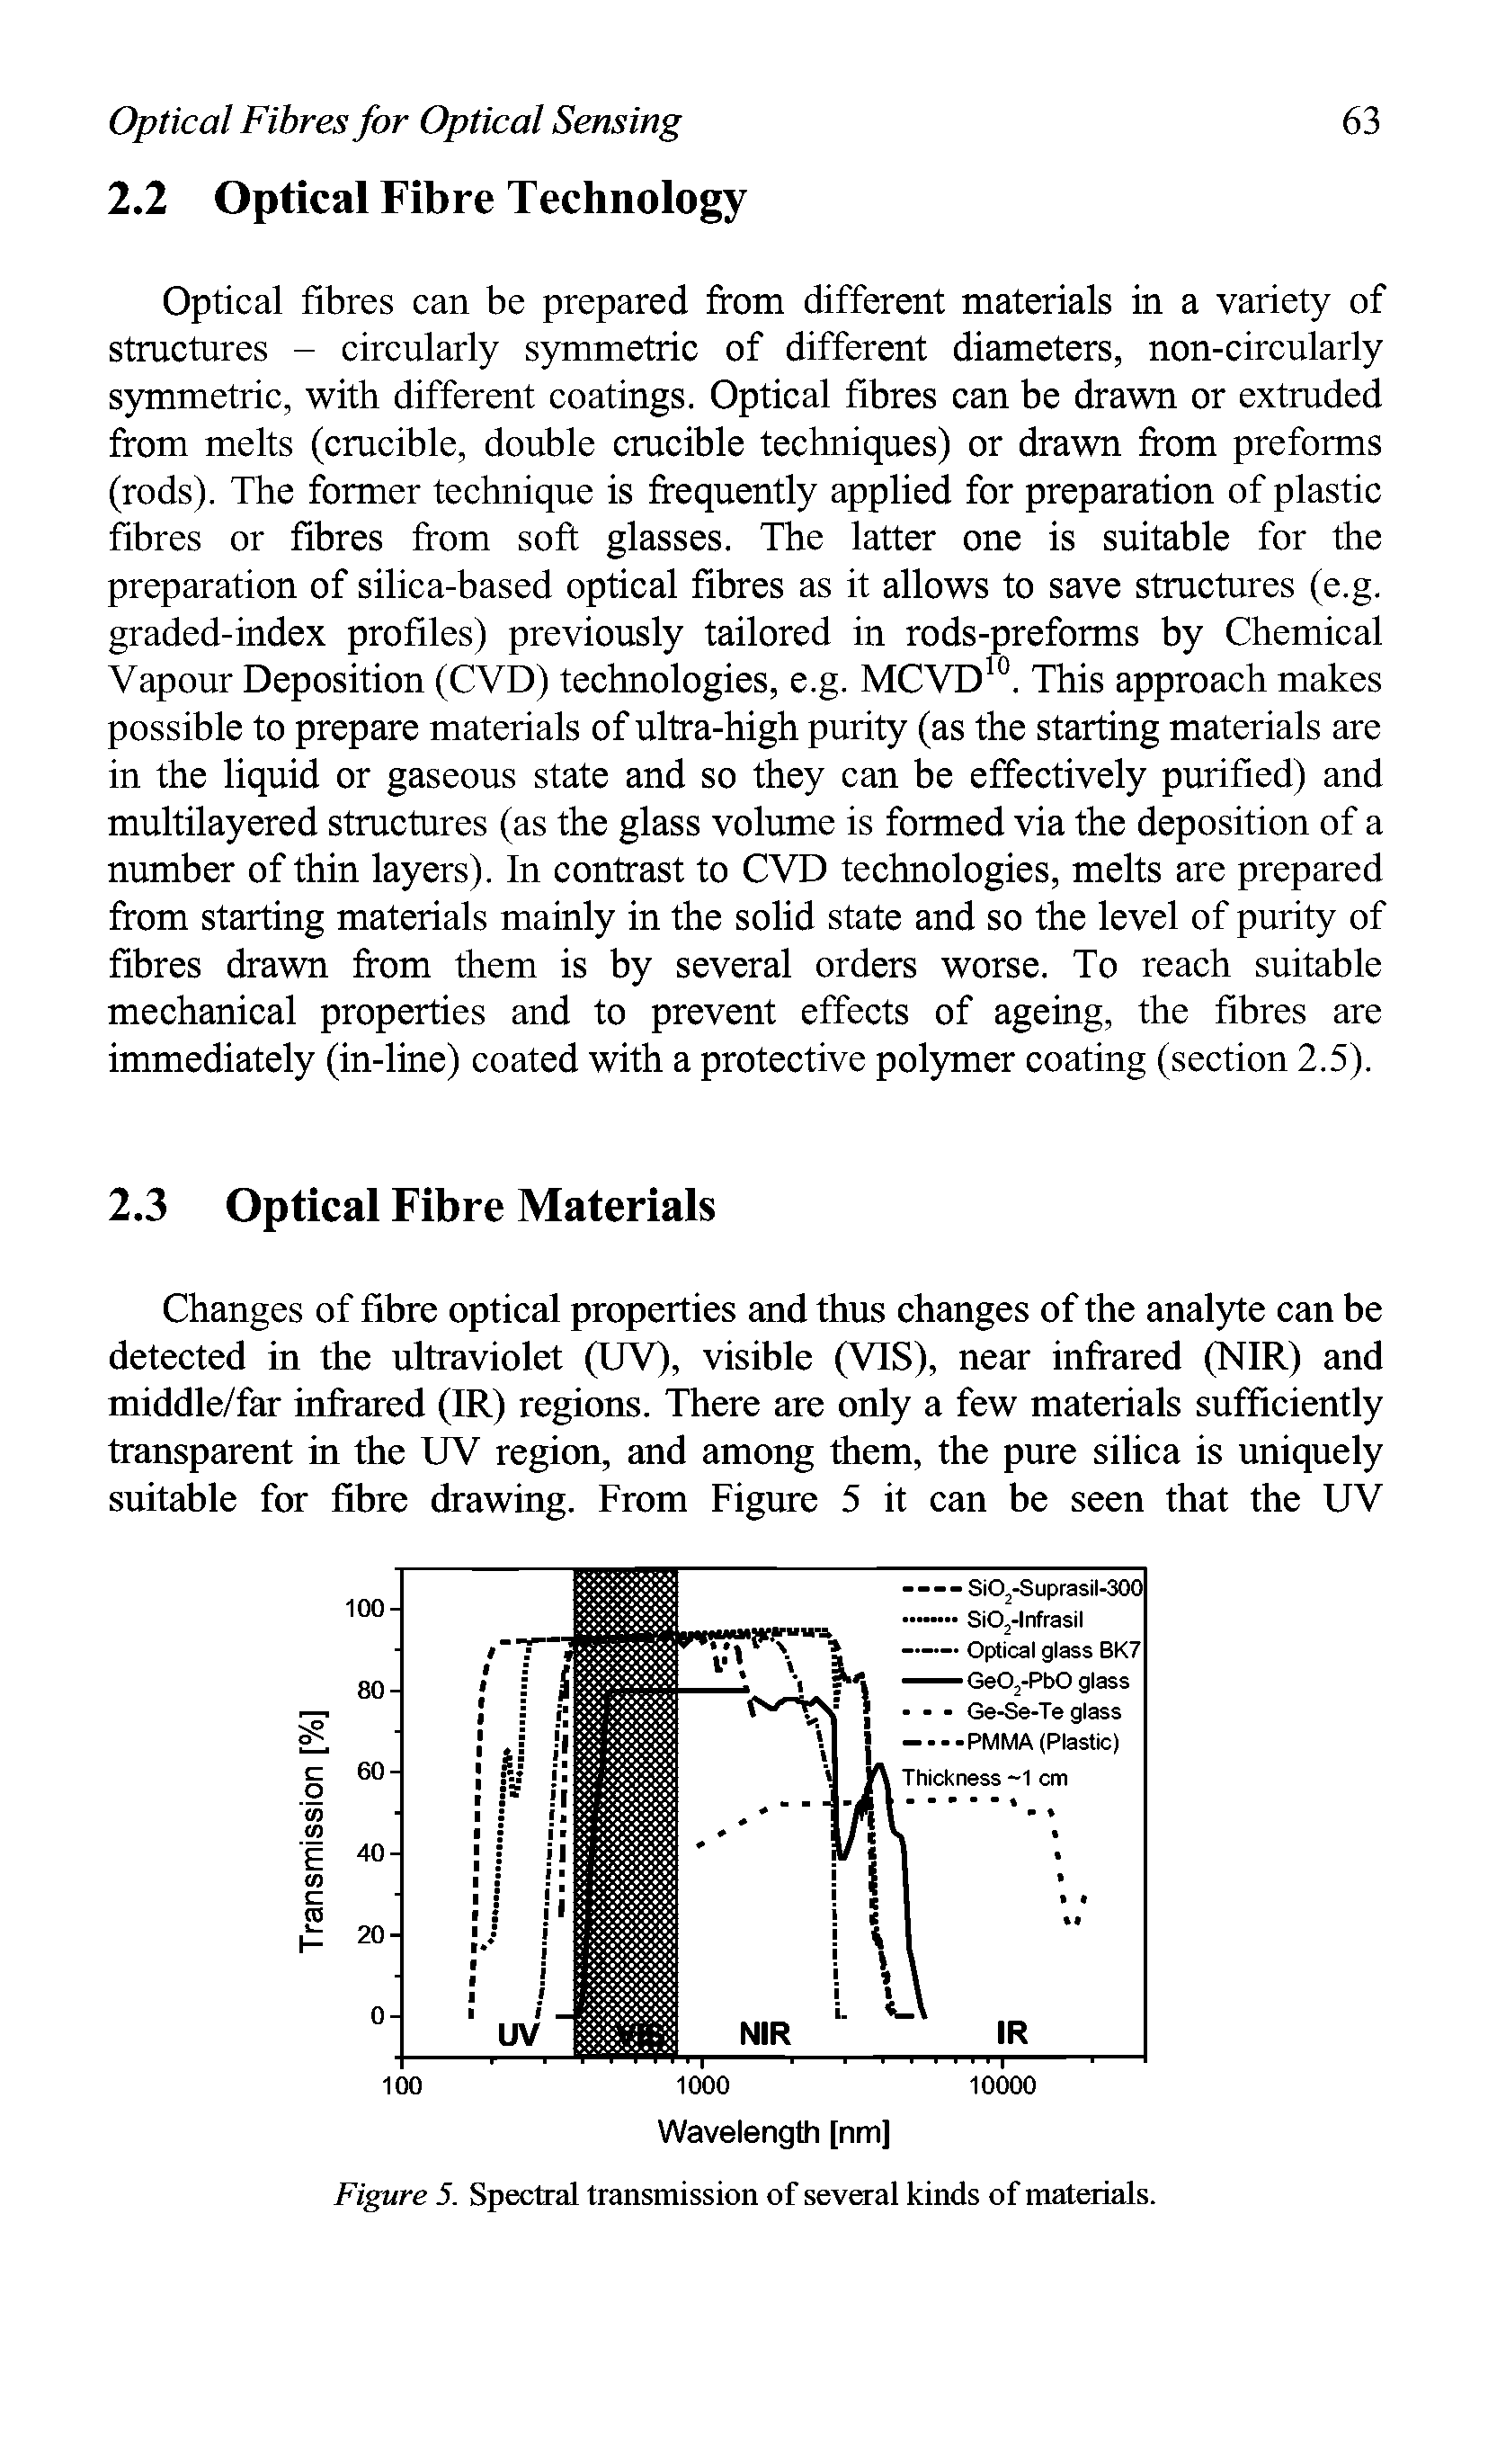 Figure 5. Spectral transmission of several kinds of materials.